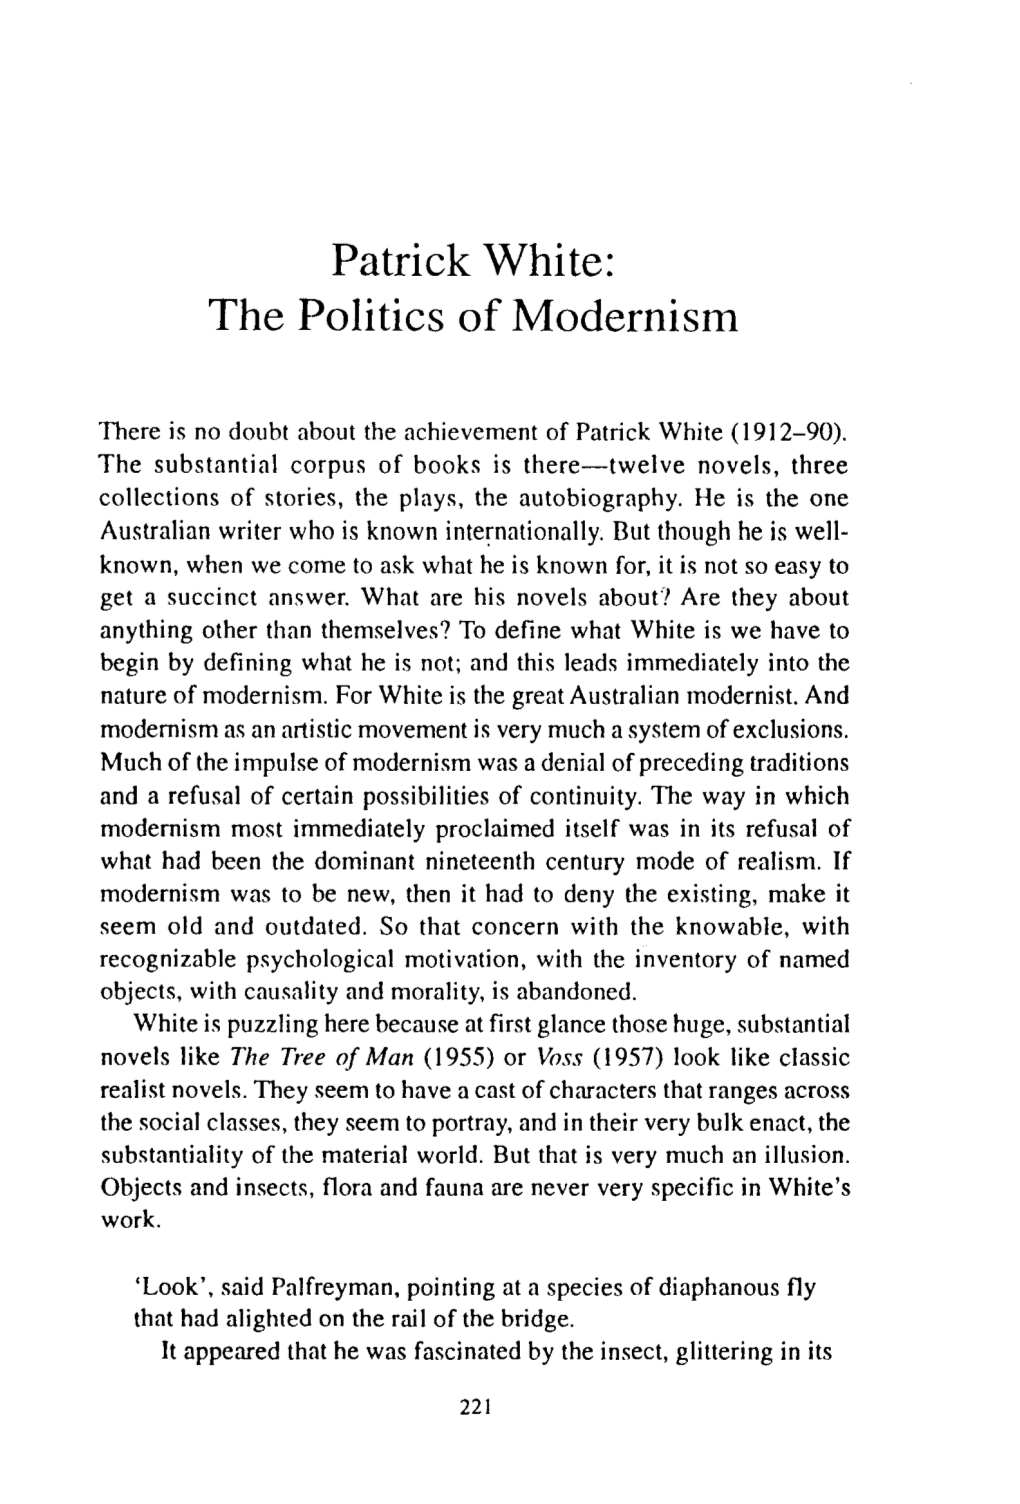 Patrick White: the Politics of Modernism